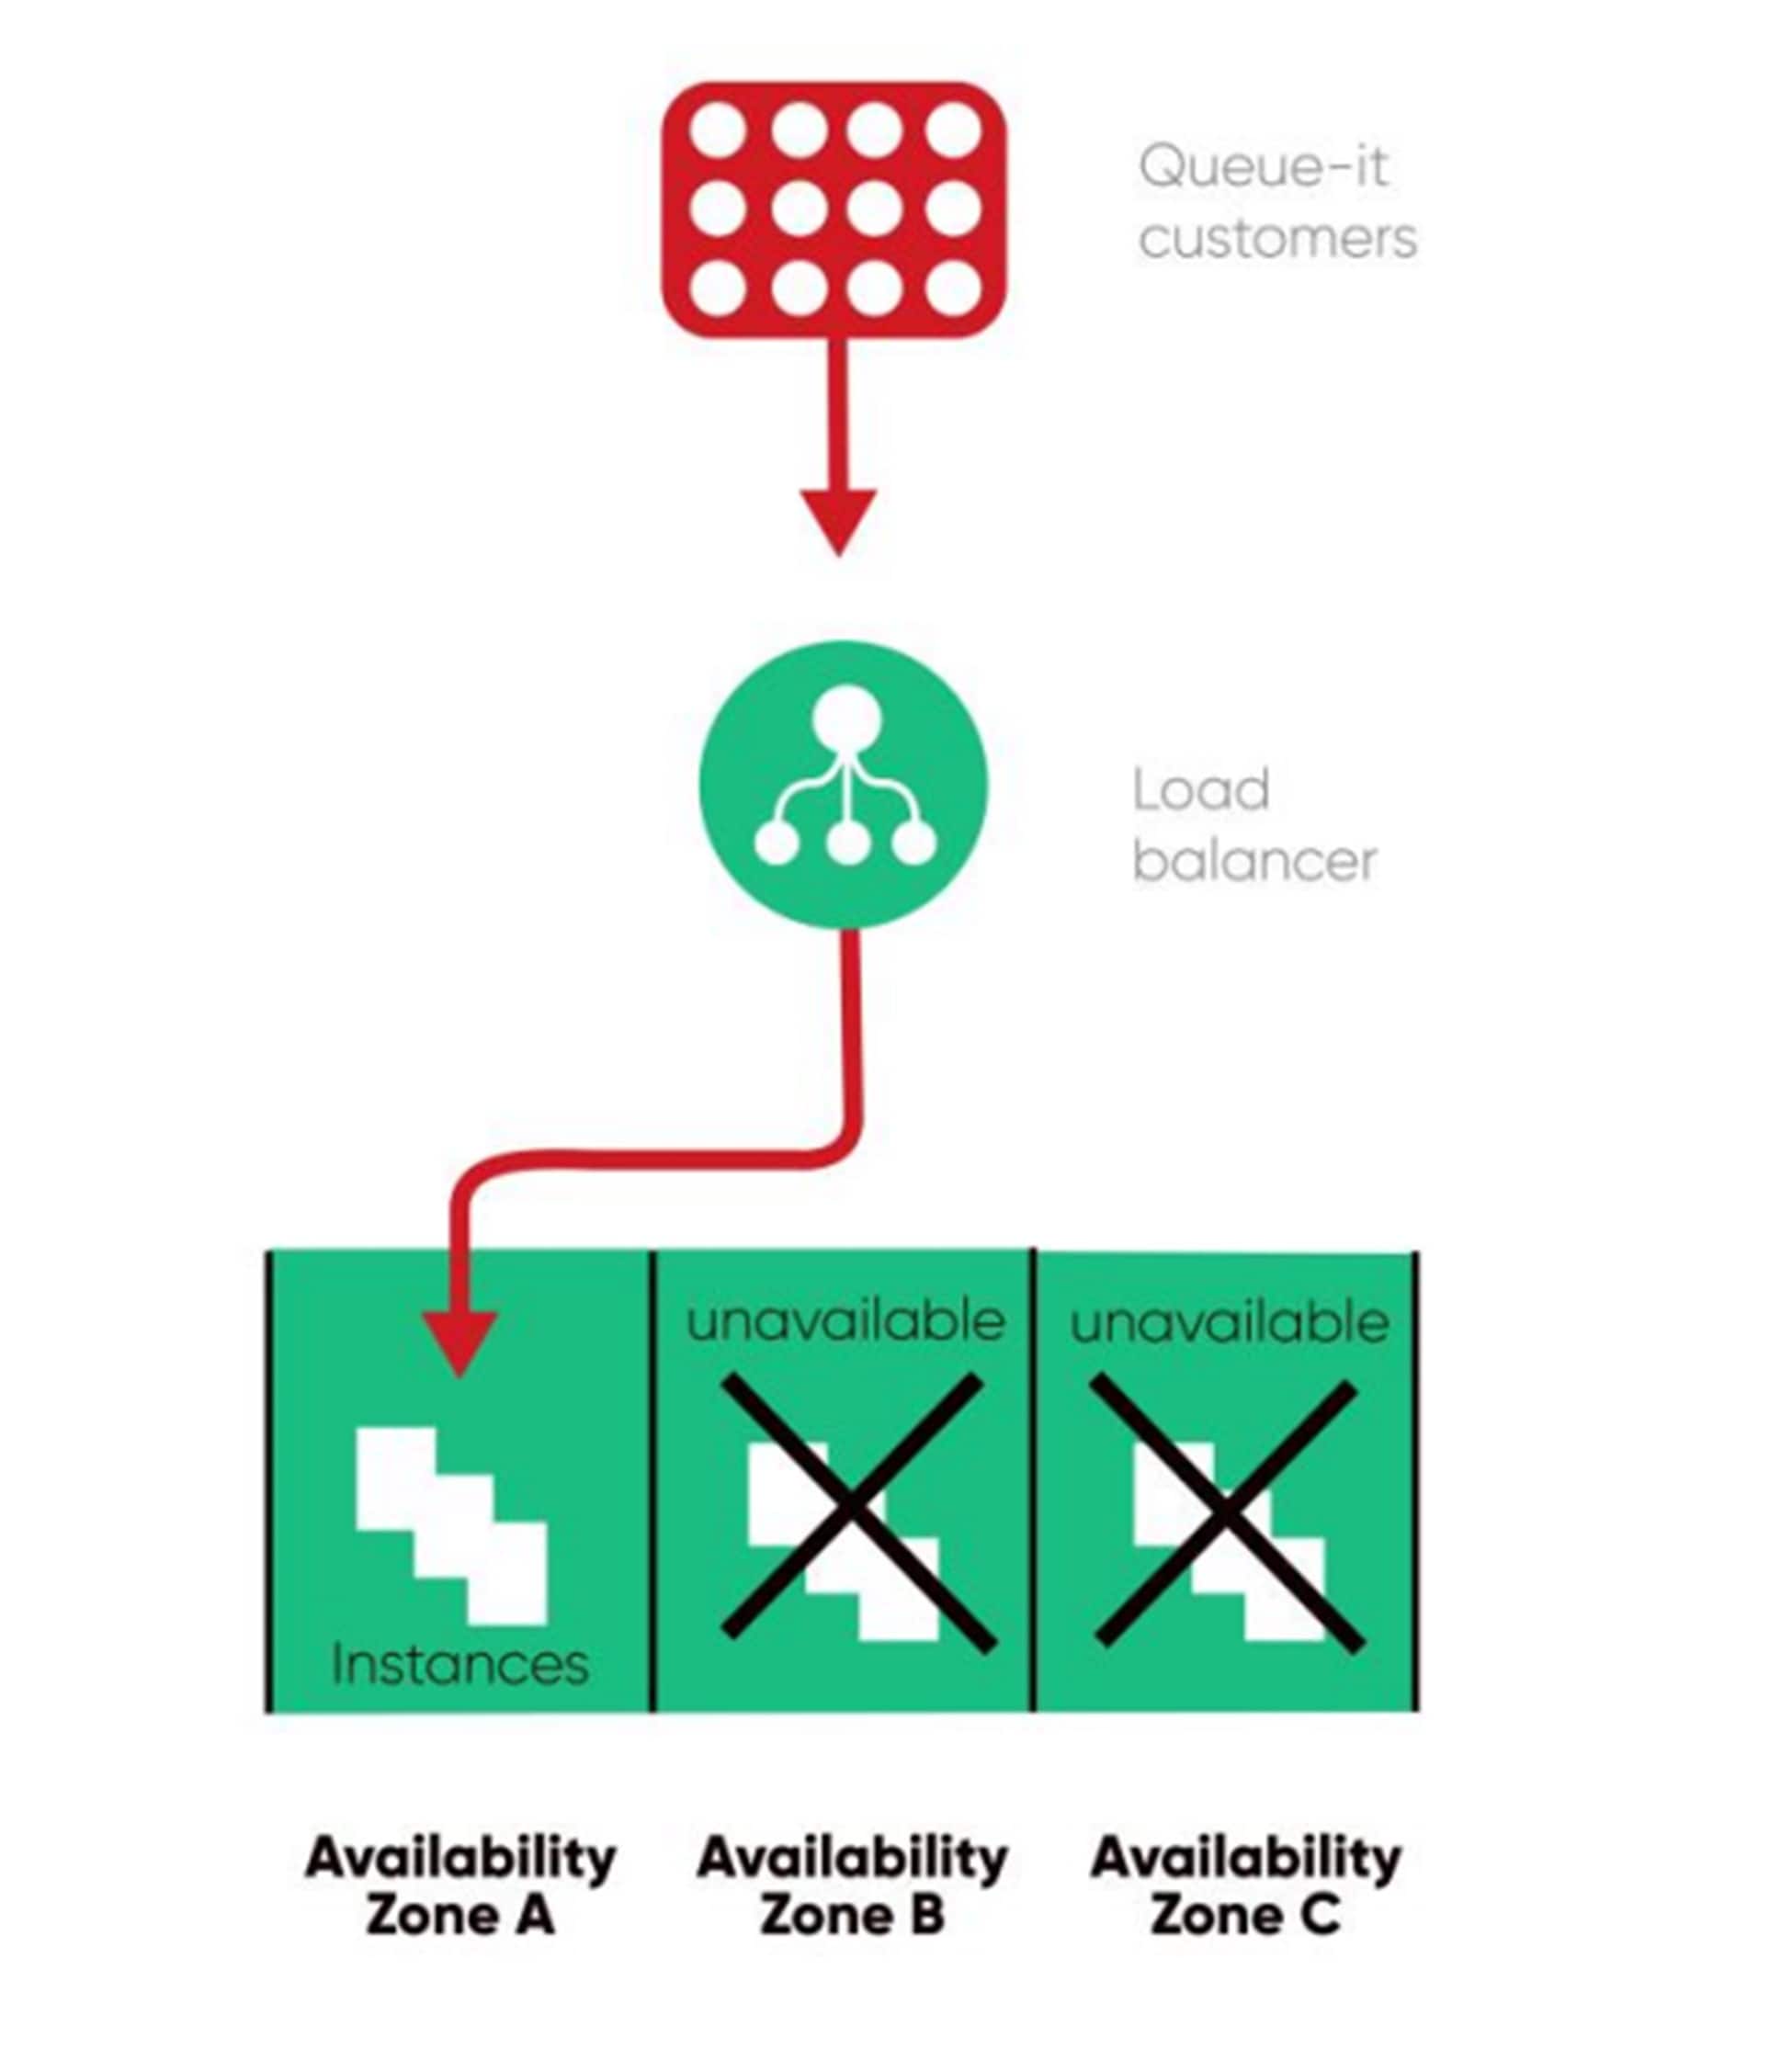 Queue-it availability zones infographic